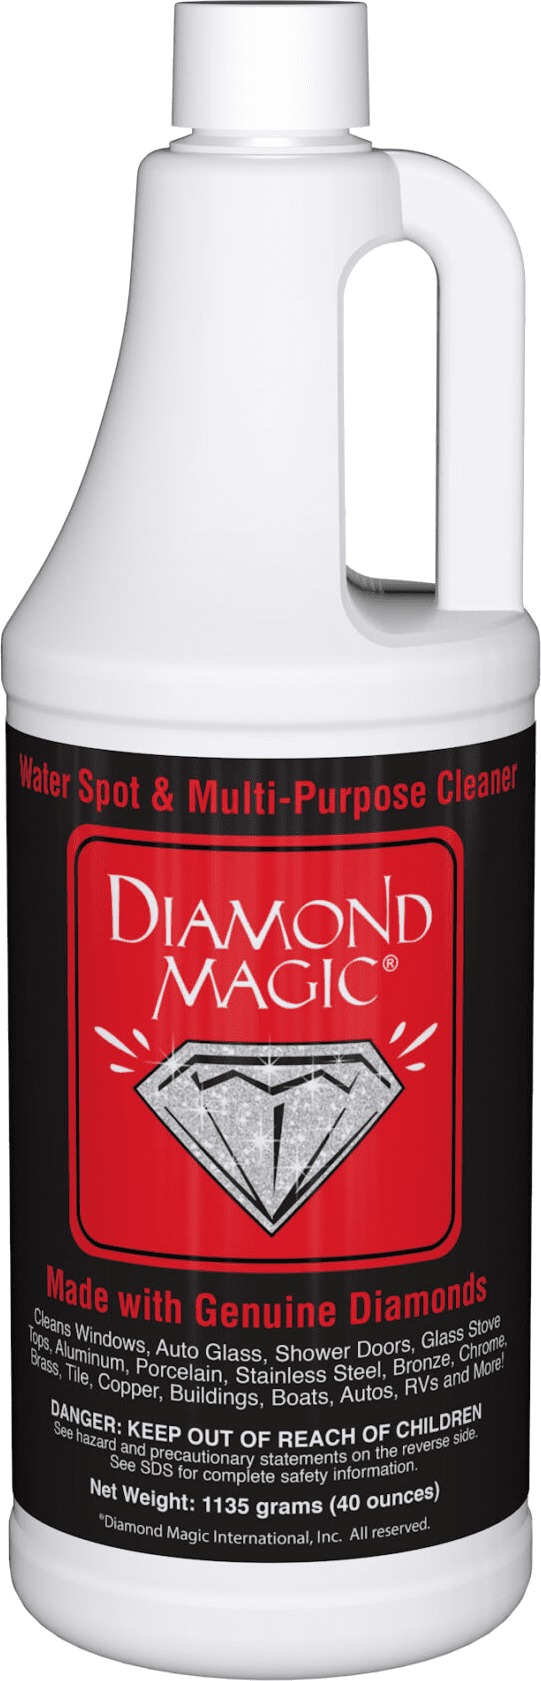 diamond magic window cleaner